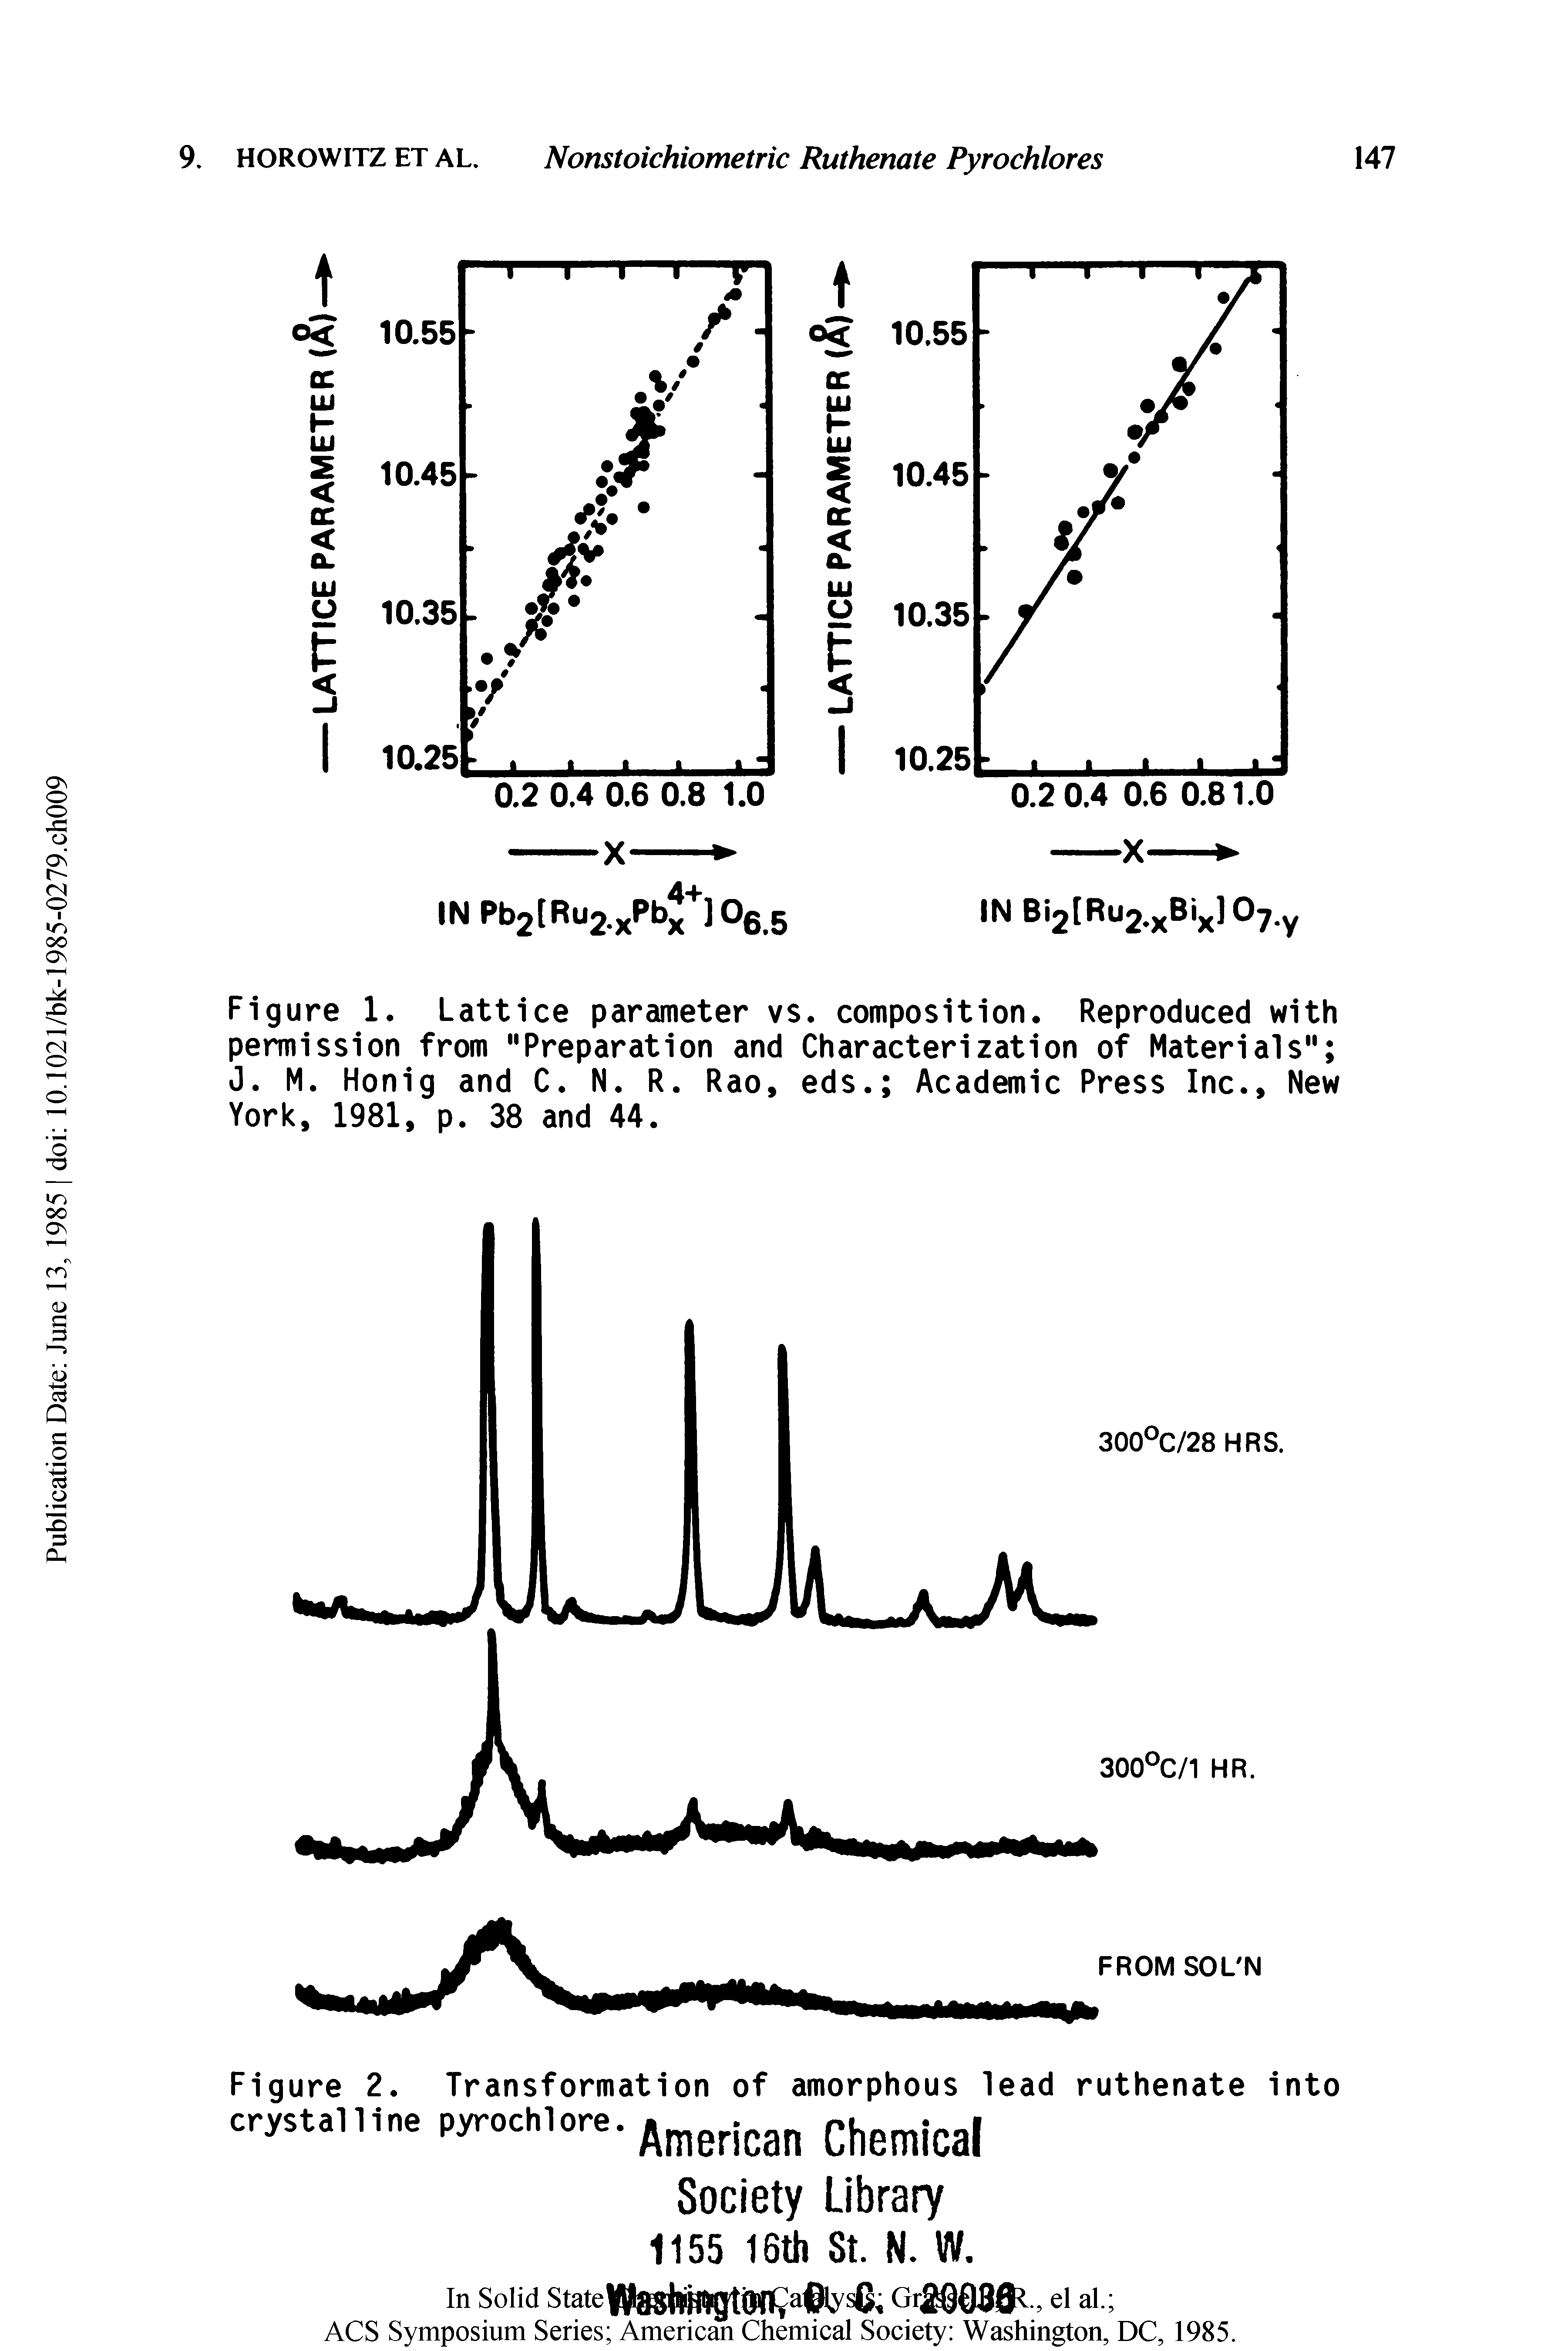 Figure 2. Transformation of amorphous lead ruthenate into crystalline pyrochlore.